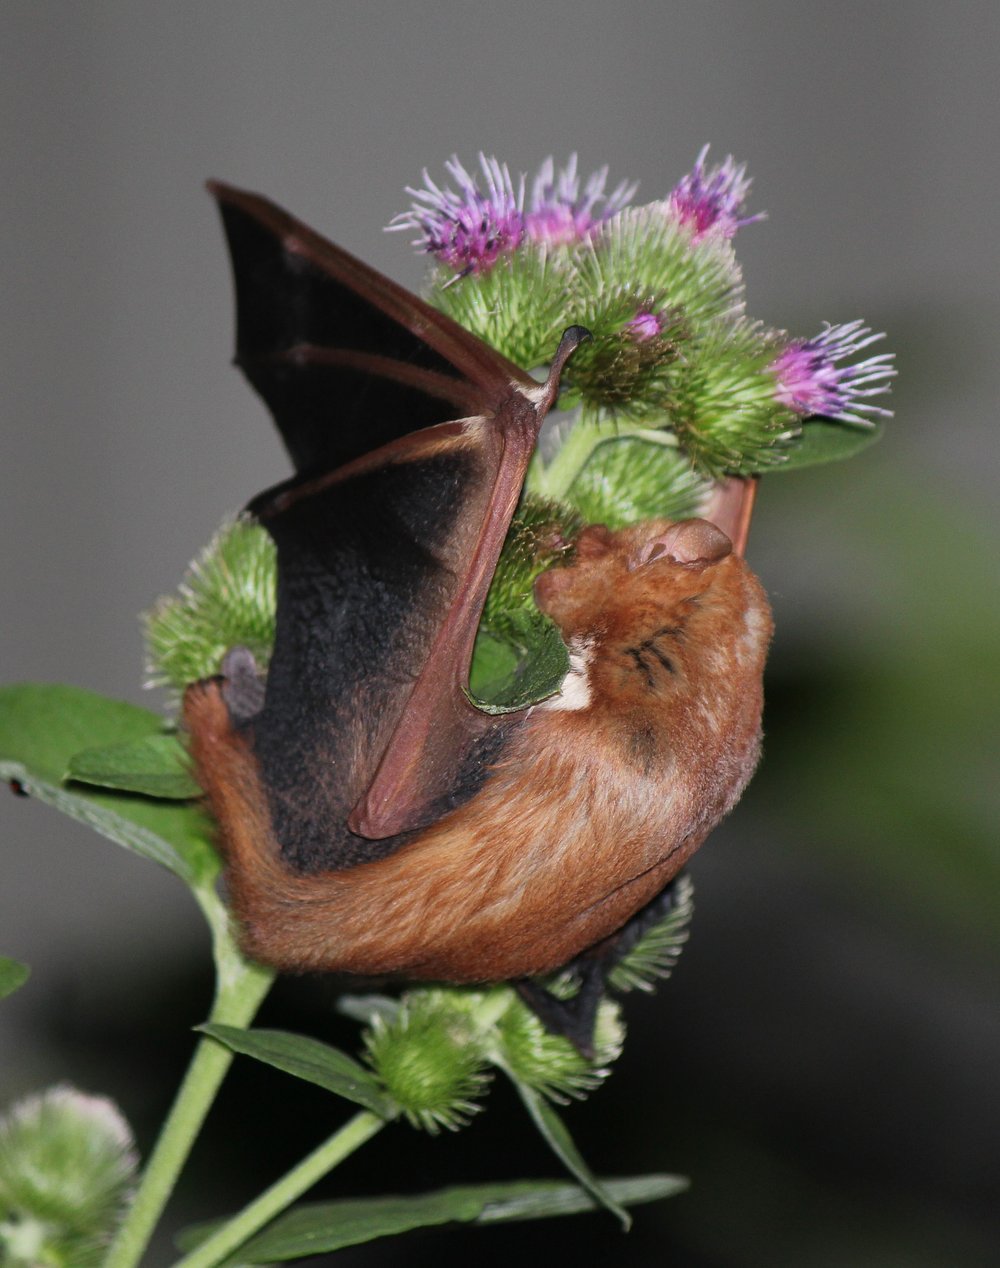 Eastern red bat stuck to a burdock plant